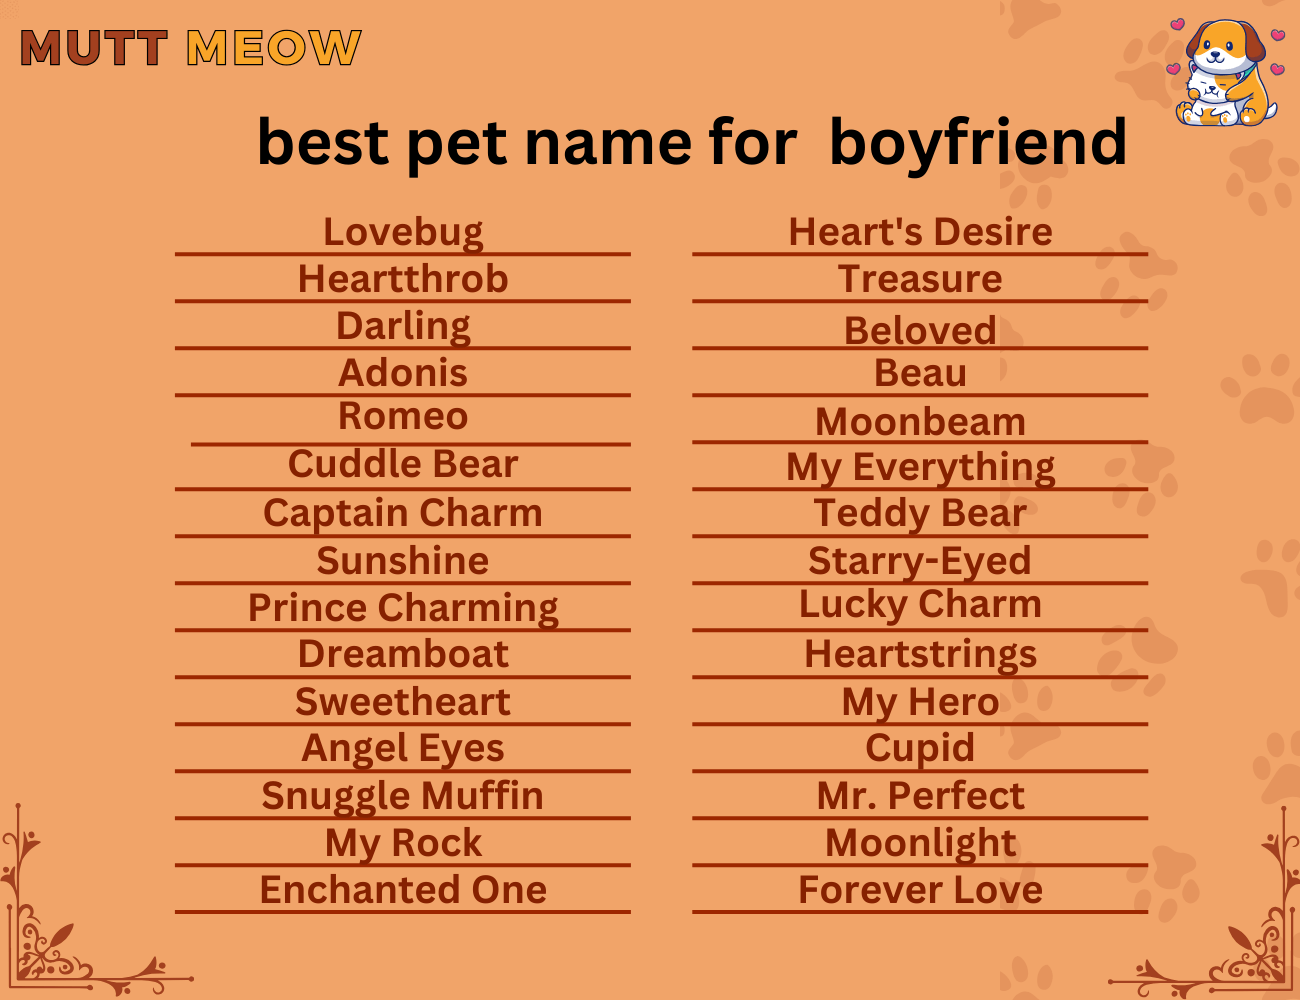 best pet name for my boyfriend